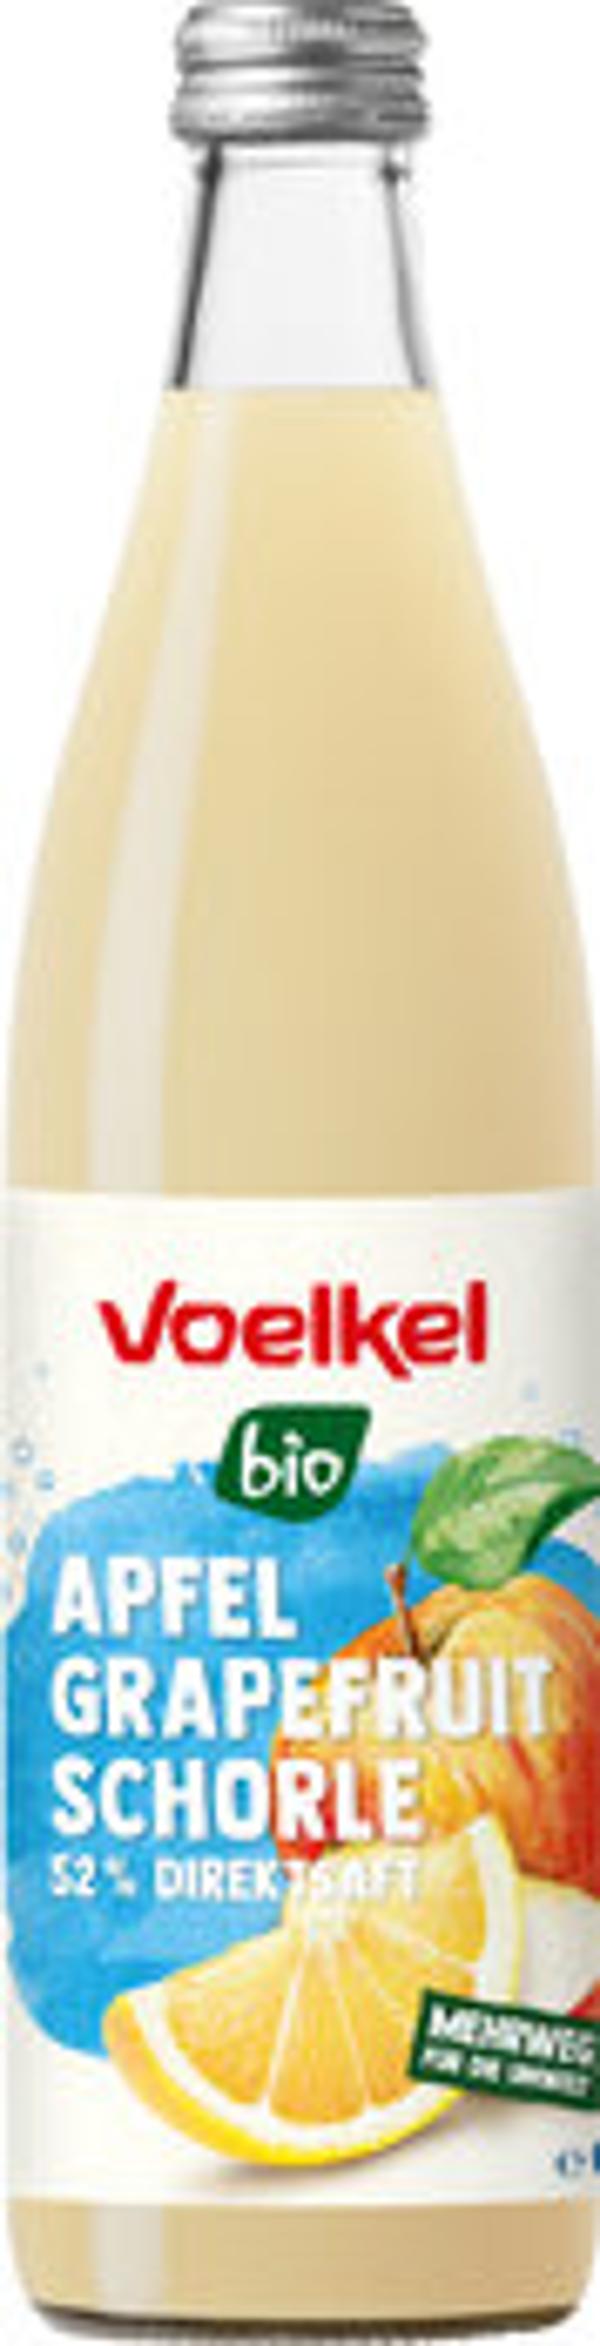 Produktfoto zu Voelkel Apfel-Grapefruit-Schorle 0,5l